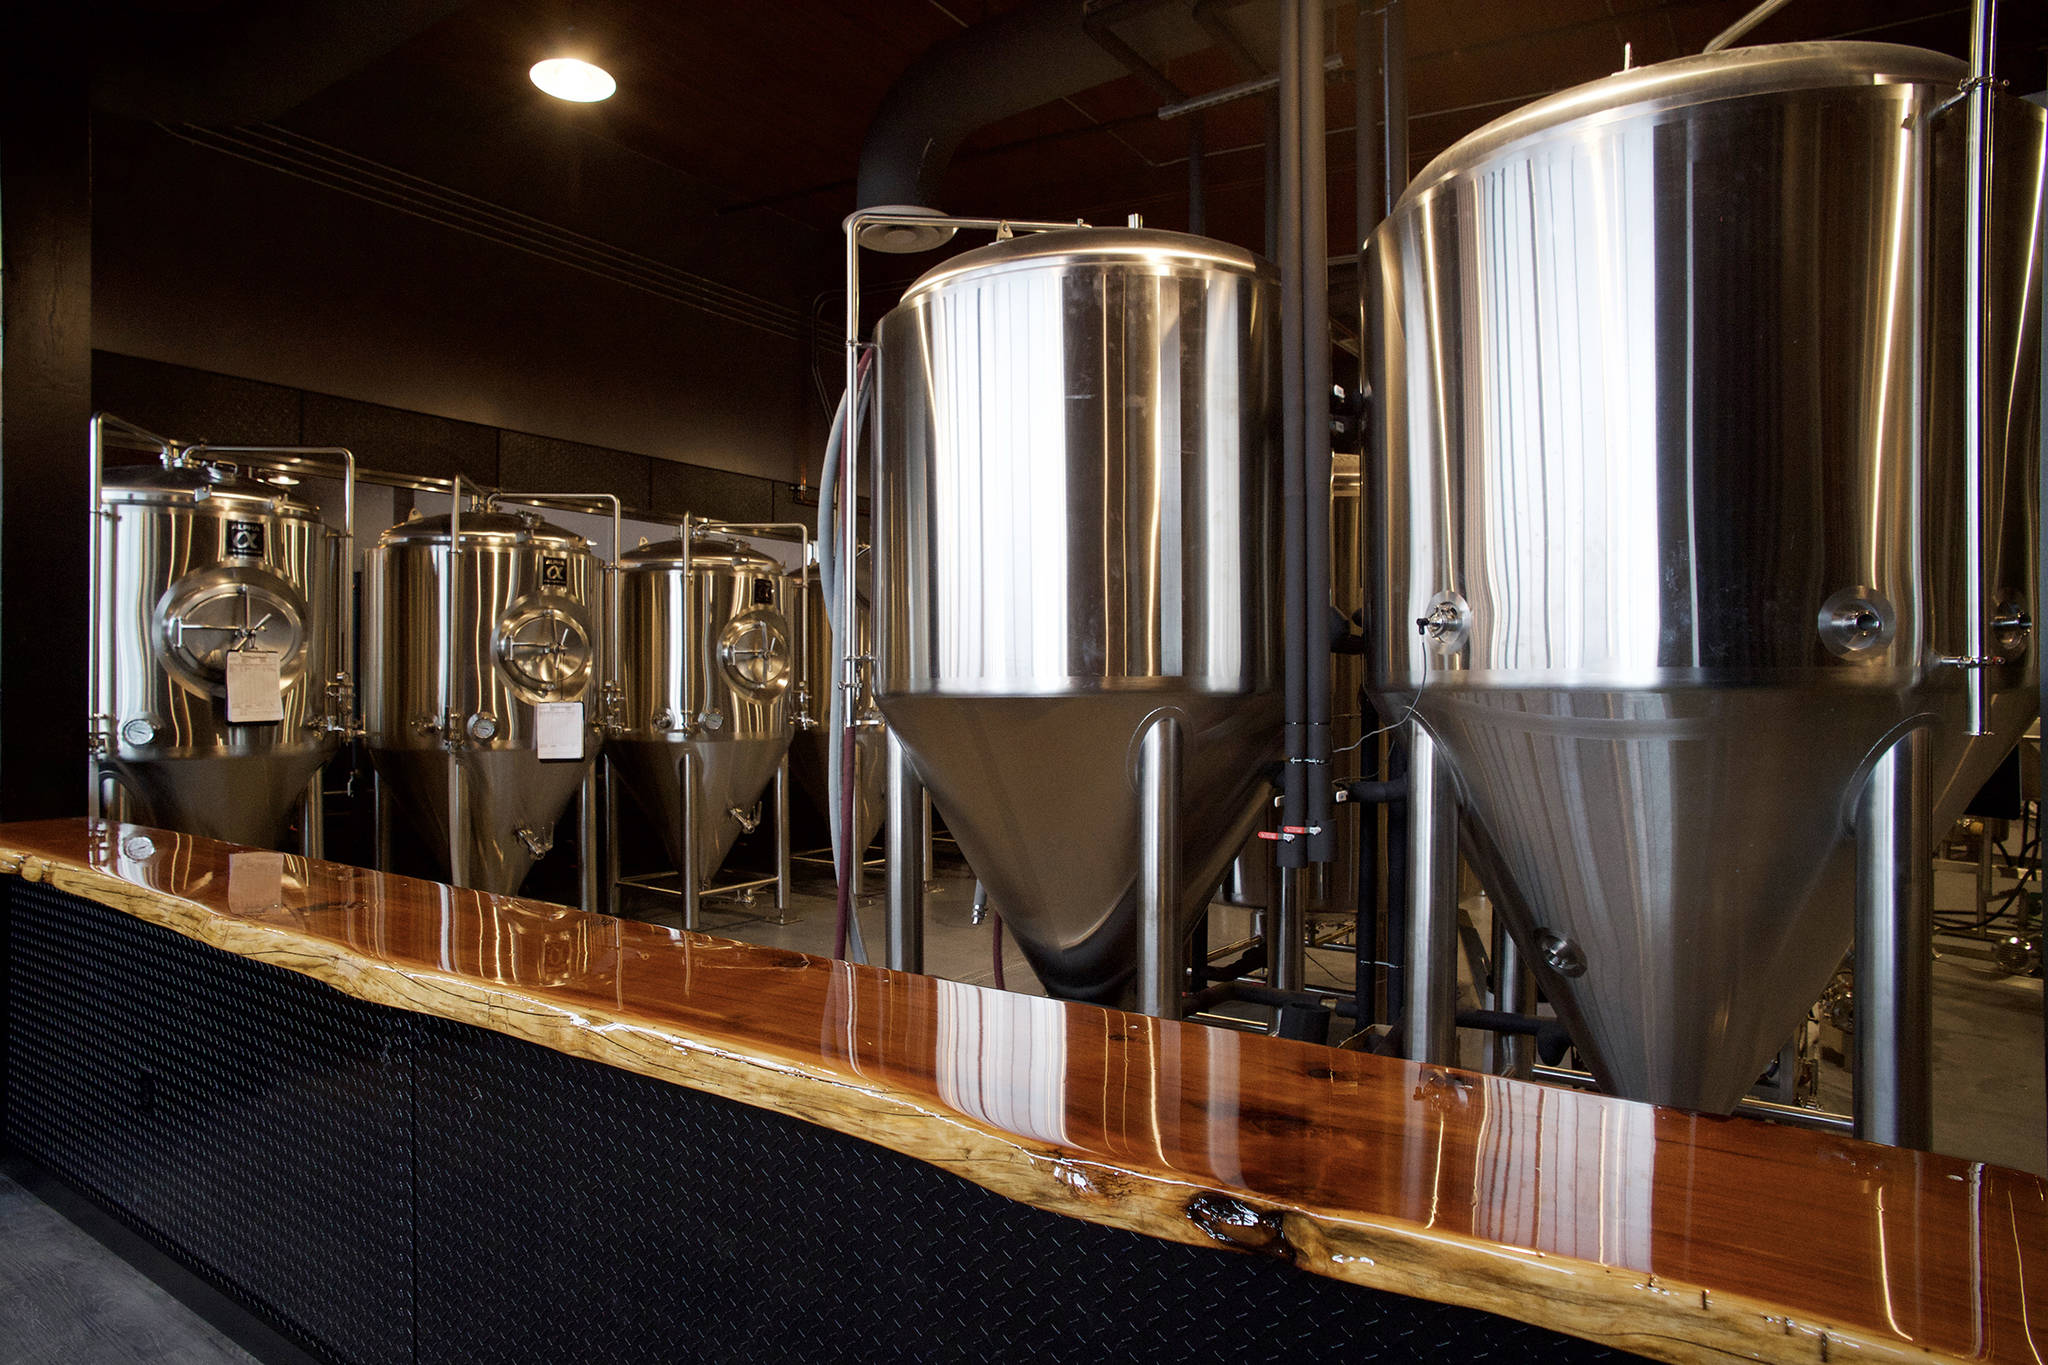 Photos: Sneak peek of Auke Bay’s newst craft brewery, Forbidden Peak Brewery